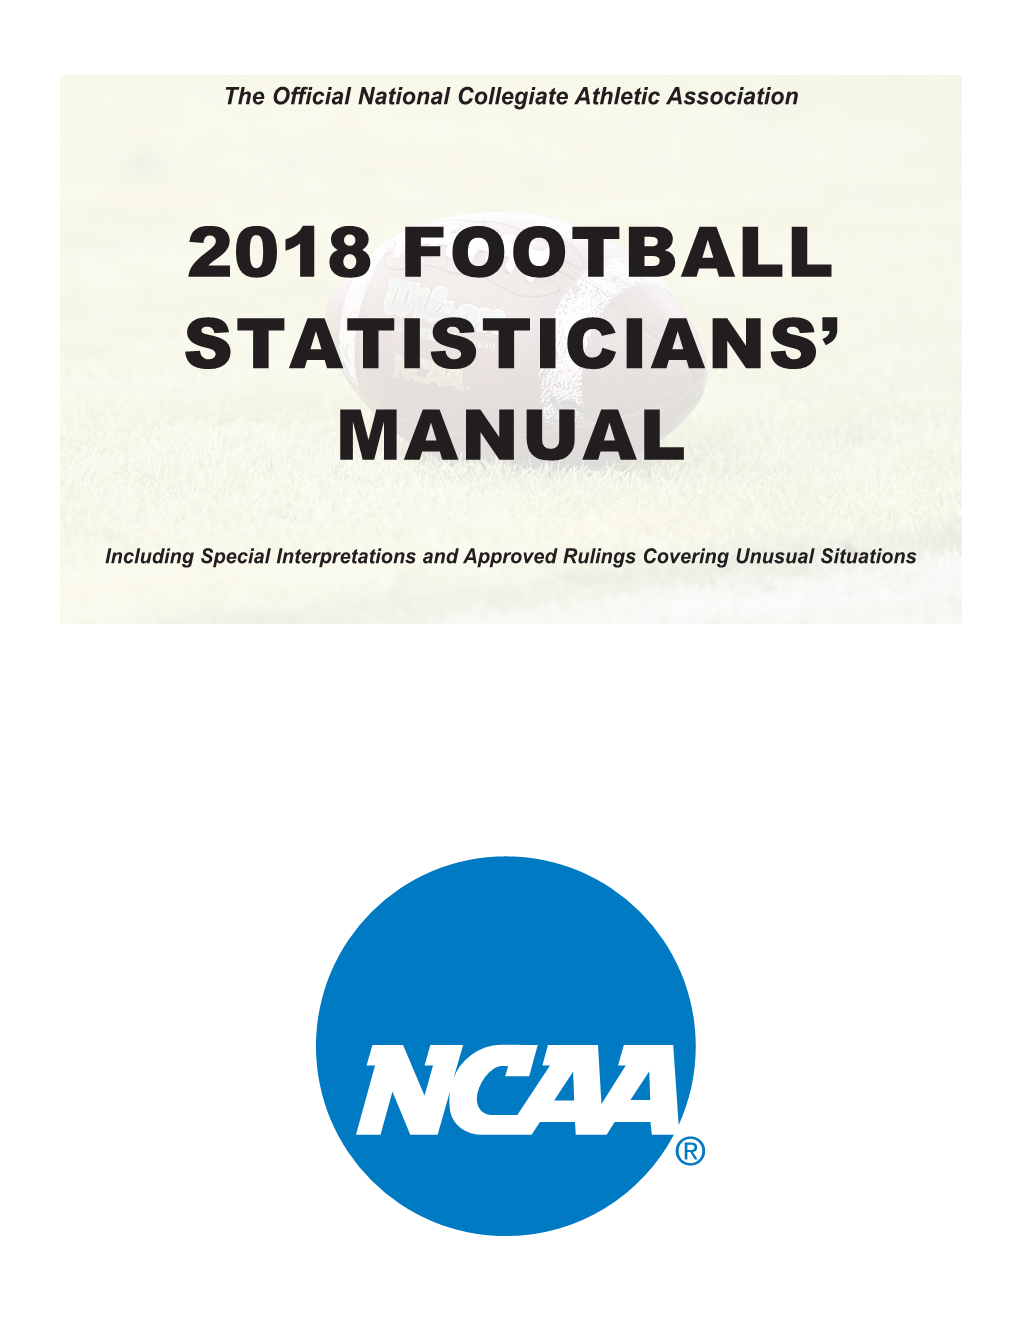 2018 Football Statisticians' Manual